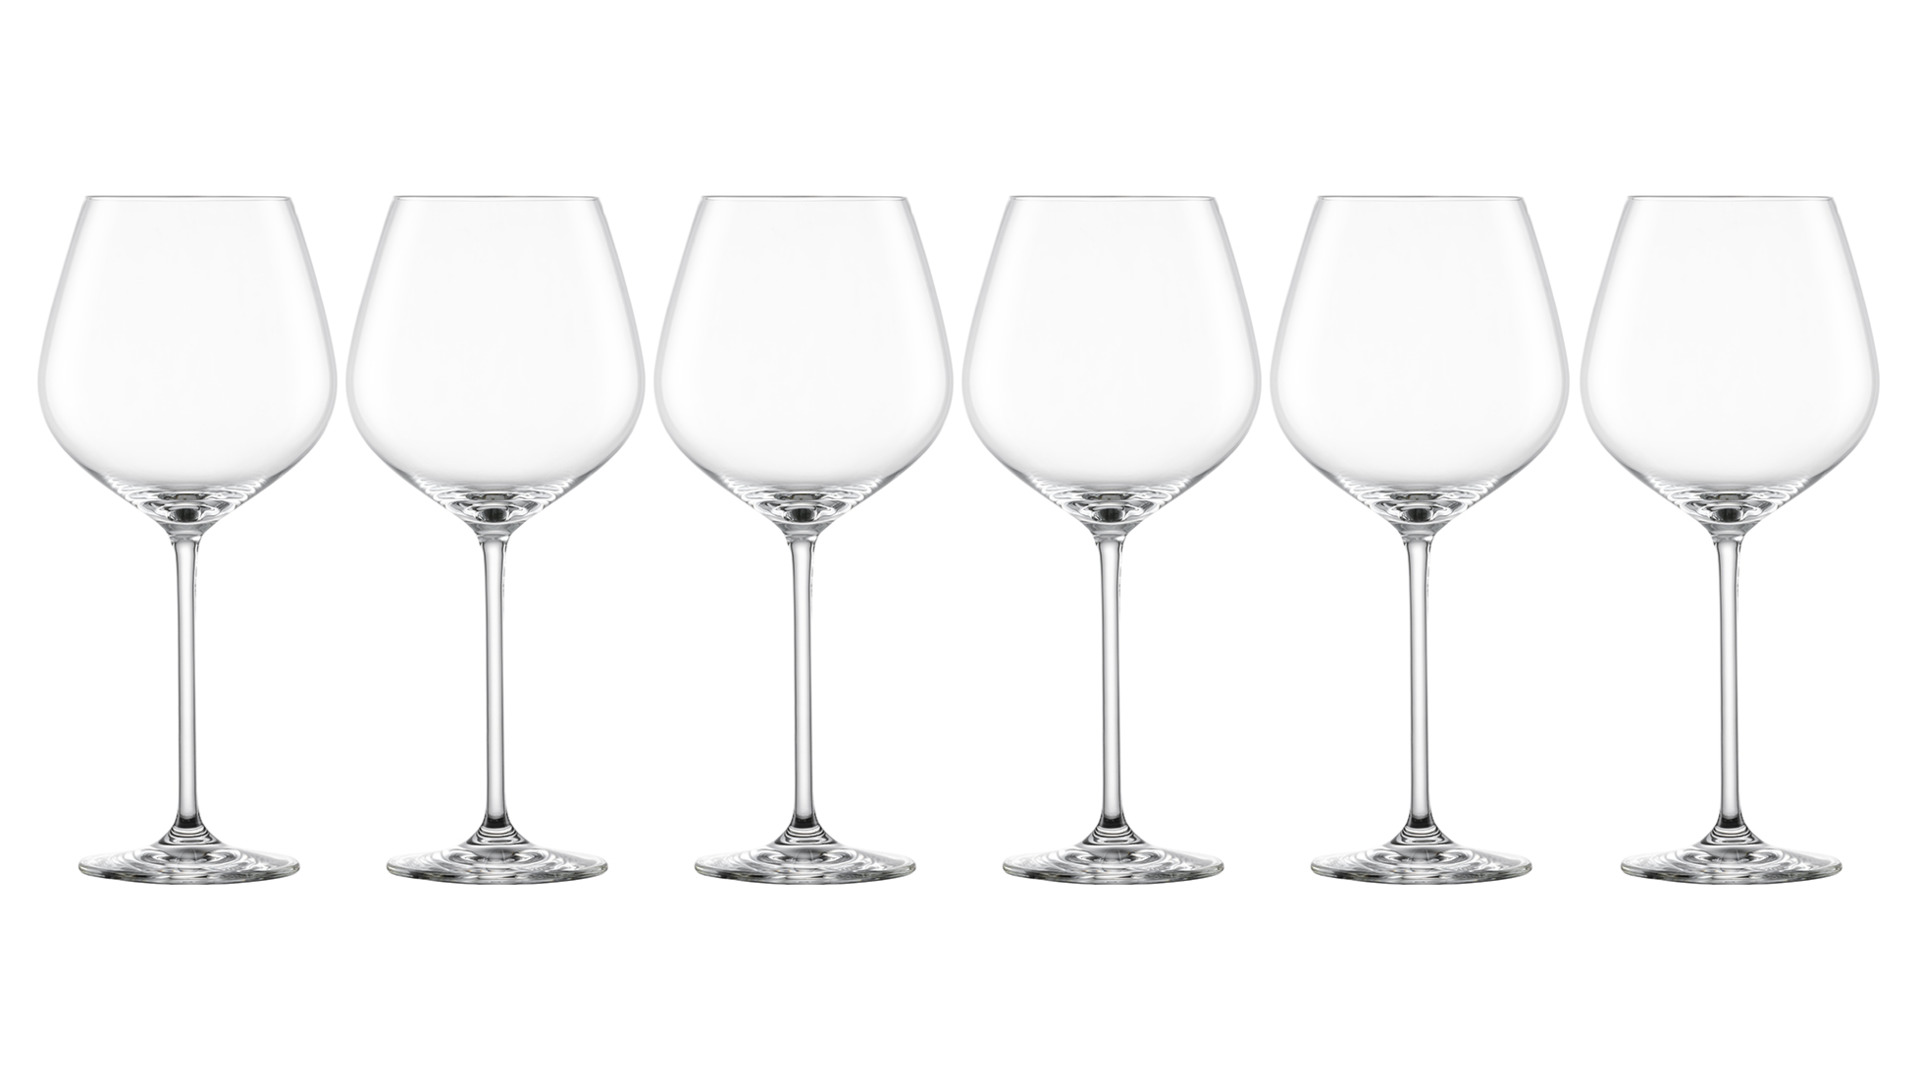 Набор бокалов для красного вина Schott Zwiesel Fortissimo 738 мл, 6 шт